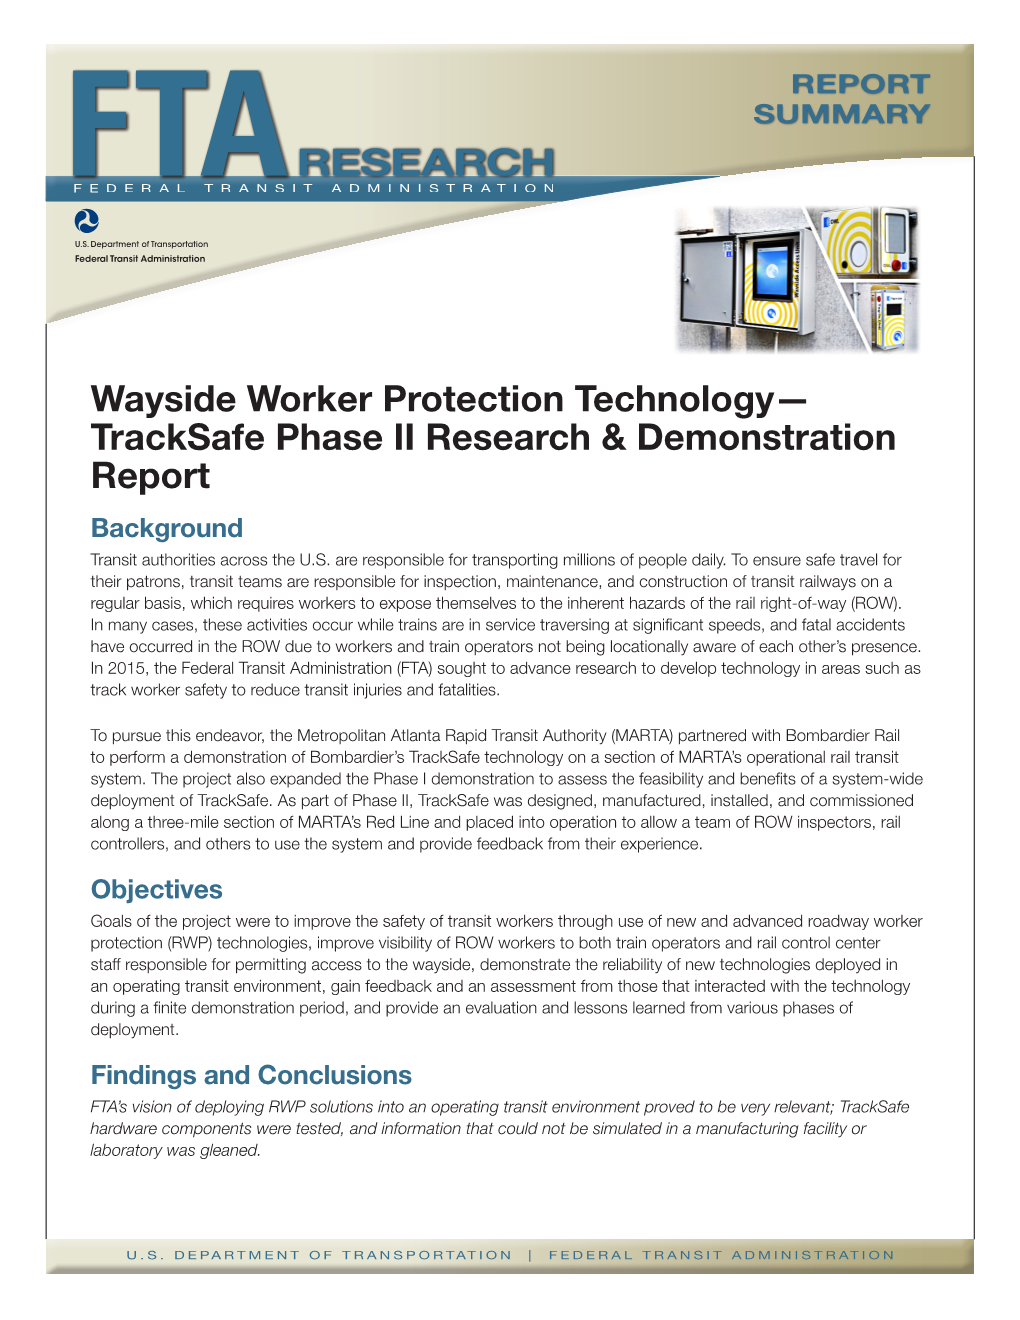 Wayside Worker Protection Technology—Tracksafe Phase II